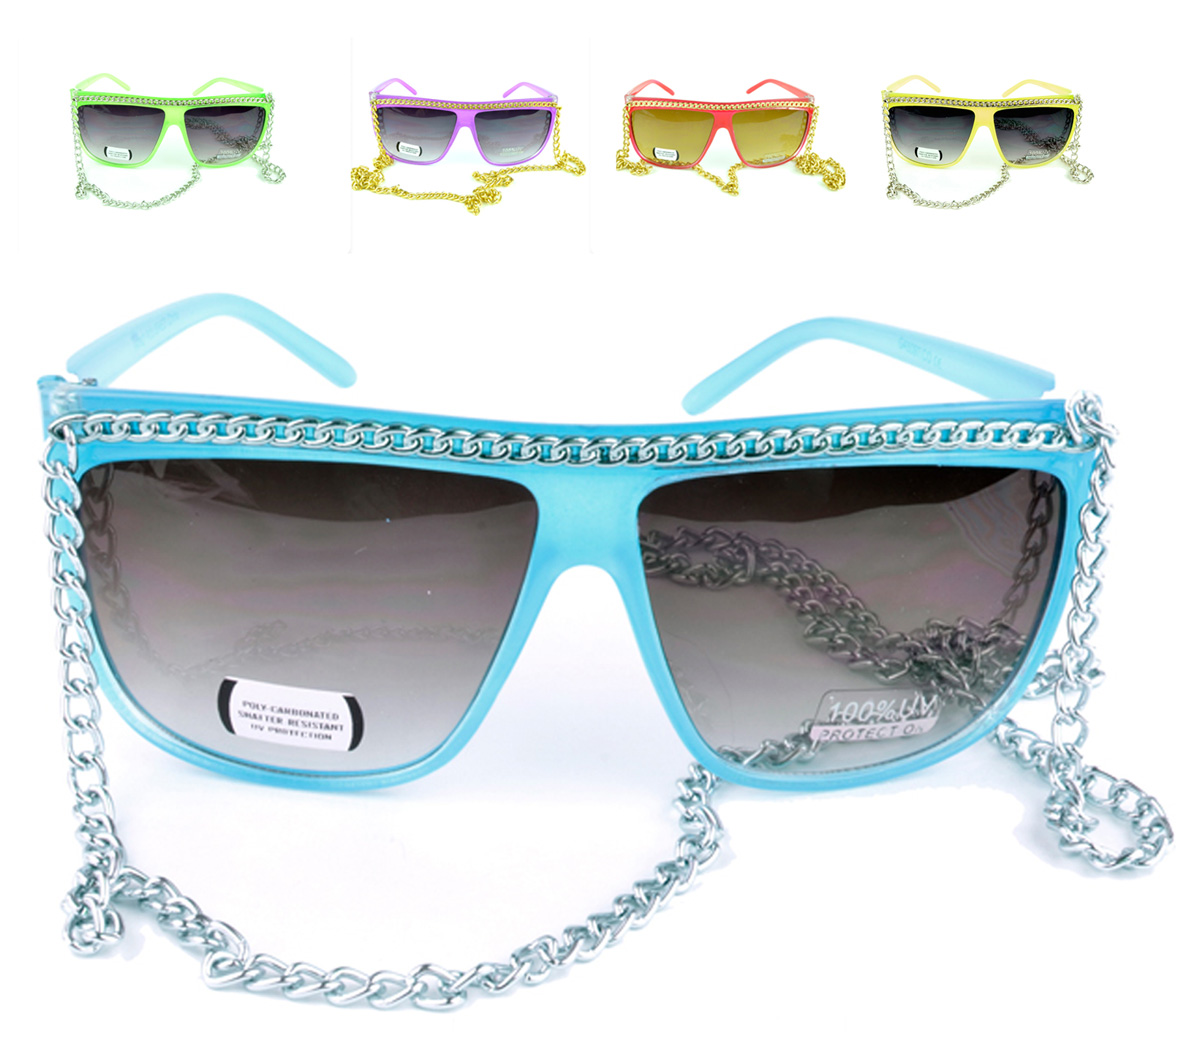 Belle Donne - Women's Hot Celebrity Style Chain Fashion Sunglasses